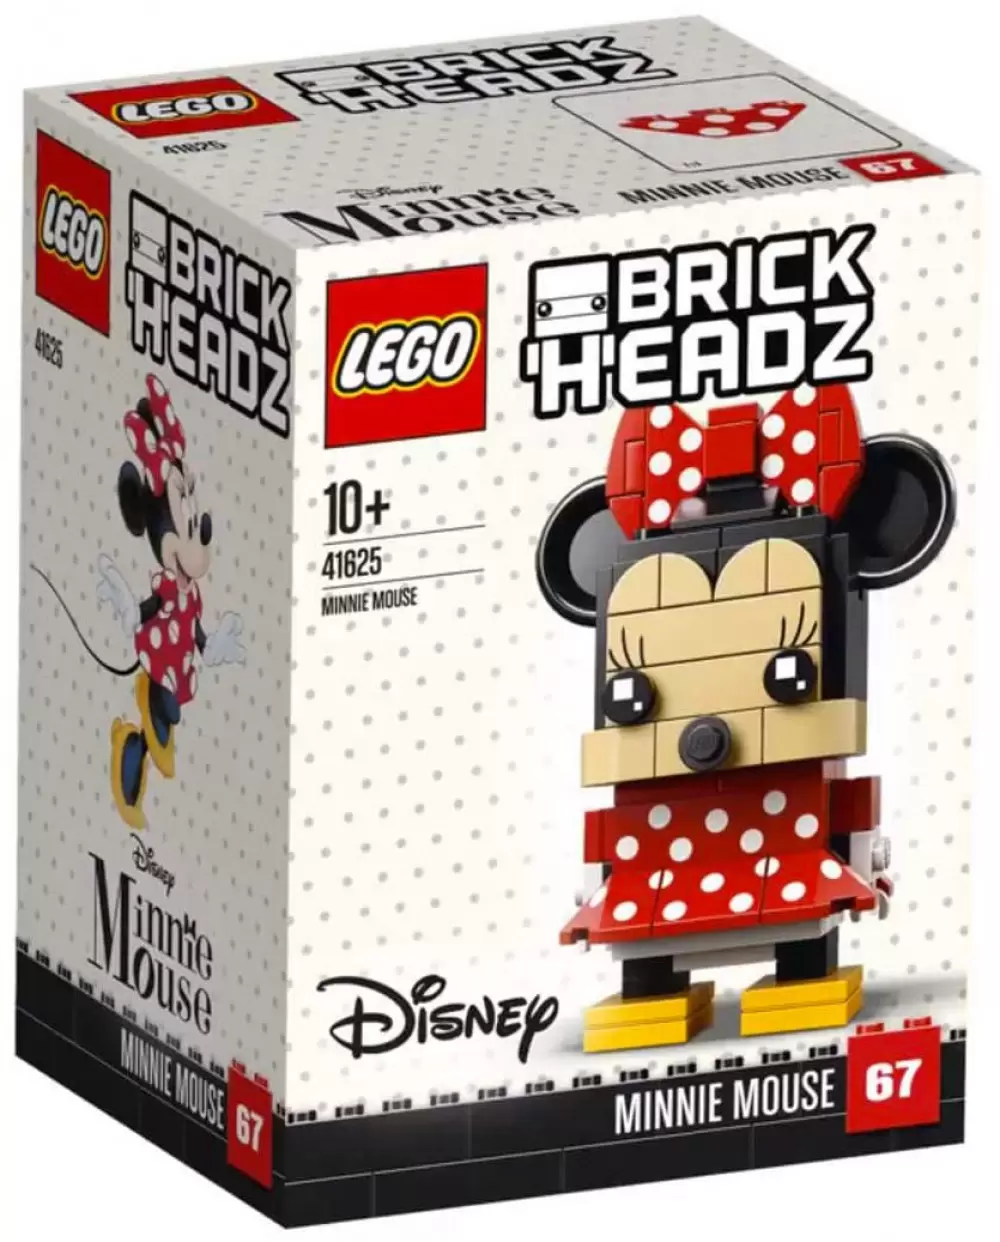 LEGO BrickHeadz - 67 - Minnie Mouse